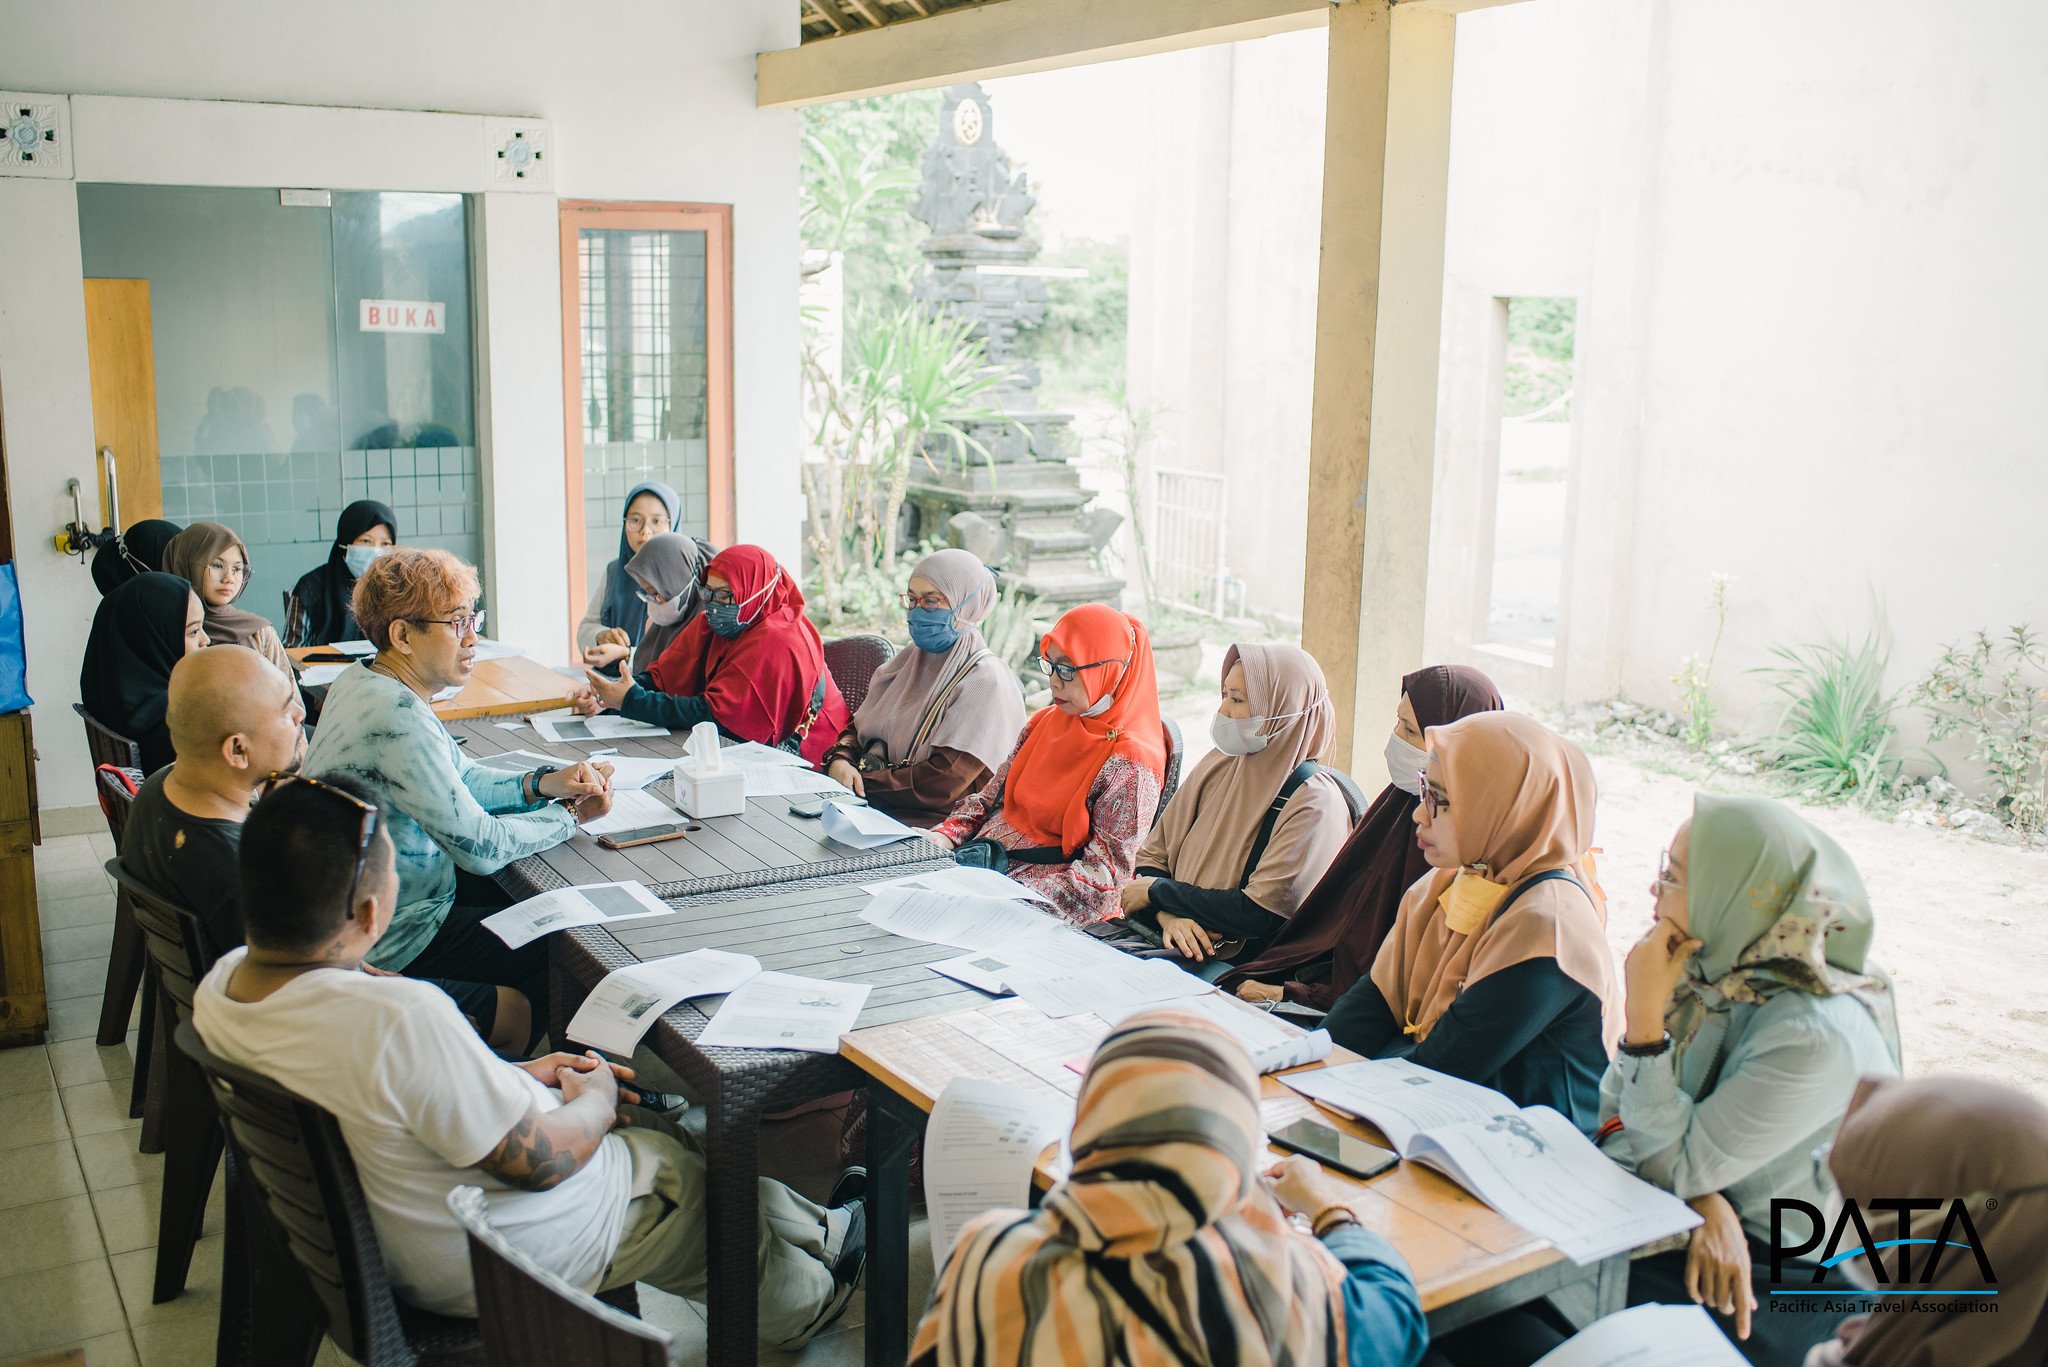 Informal Workers Programme in Jakarta, Indonesia